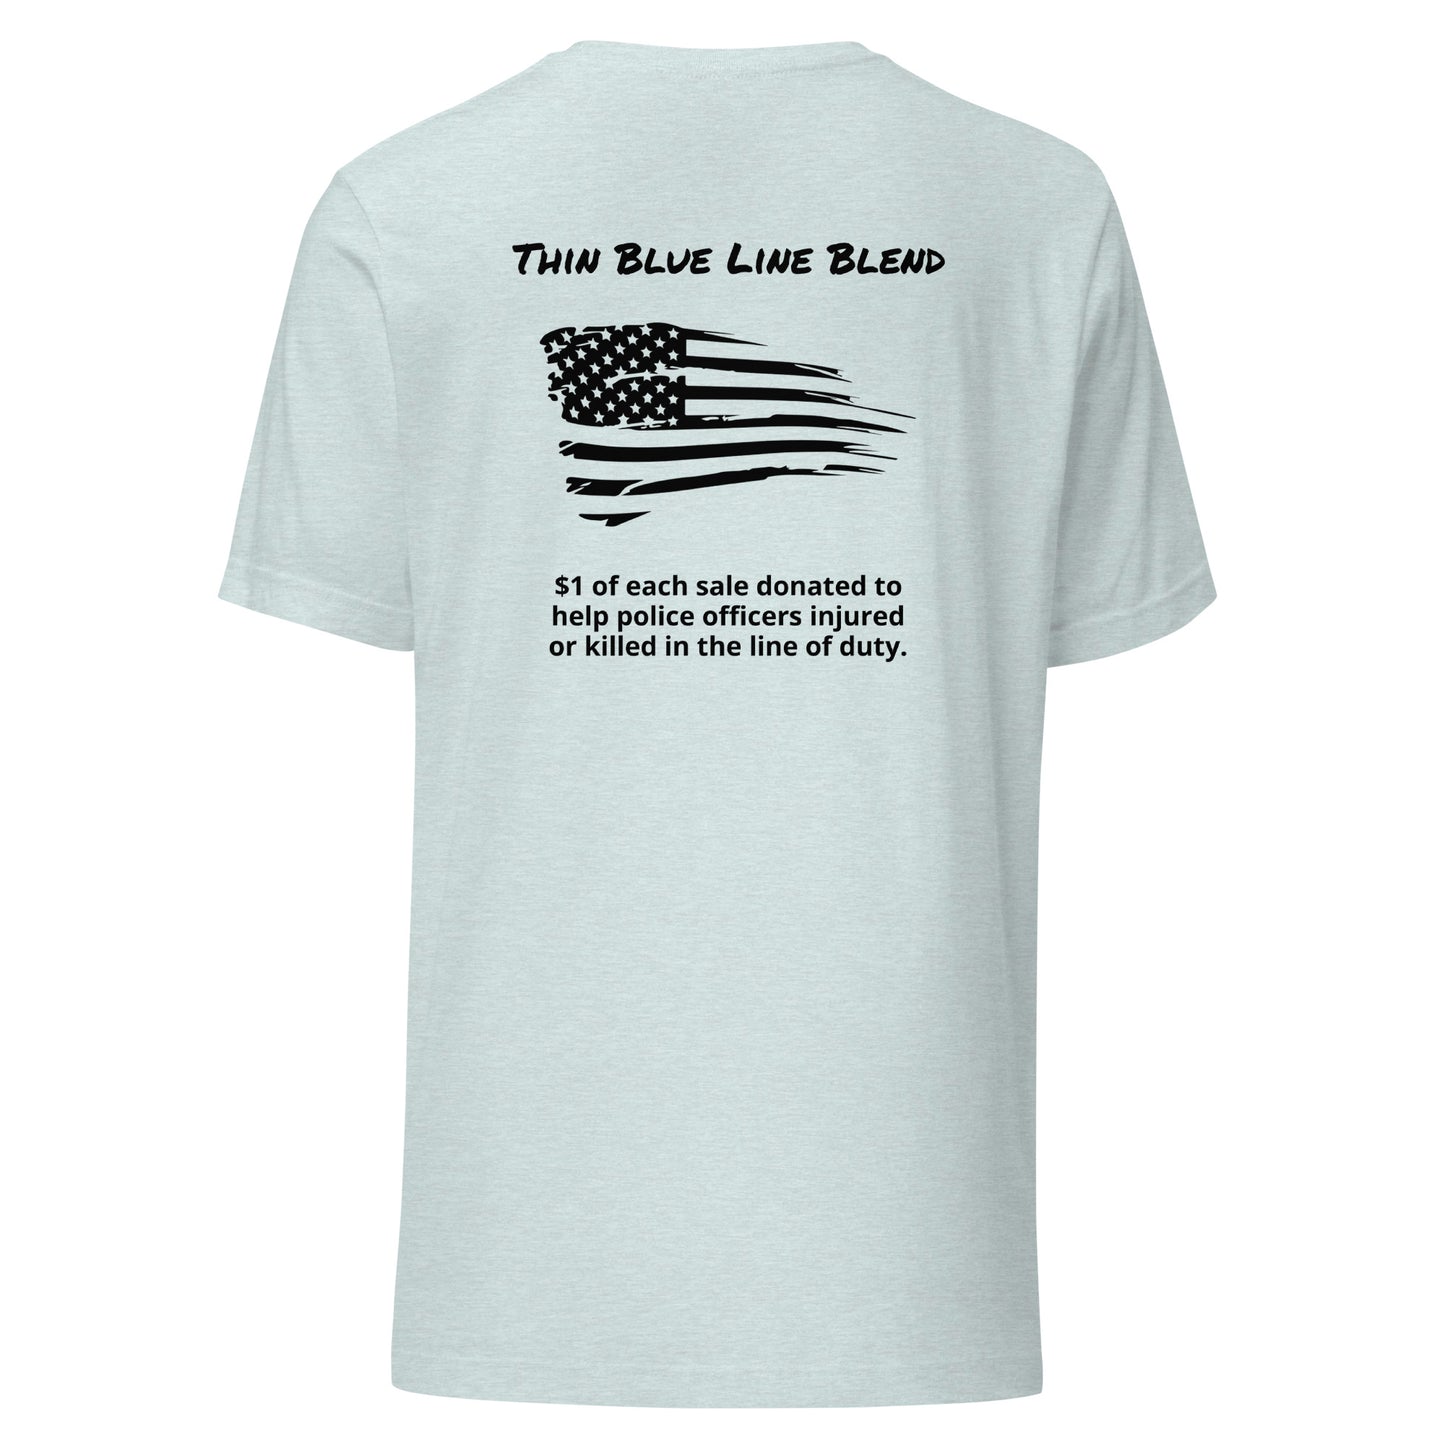 Thin Blue Line Blend (Black lettering) t-shirt